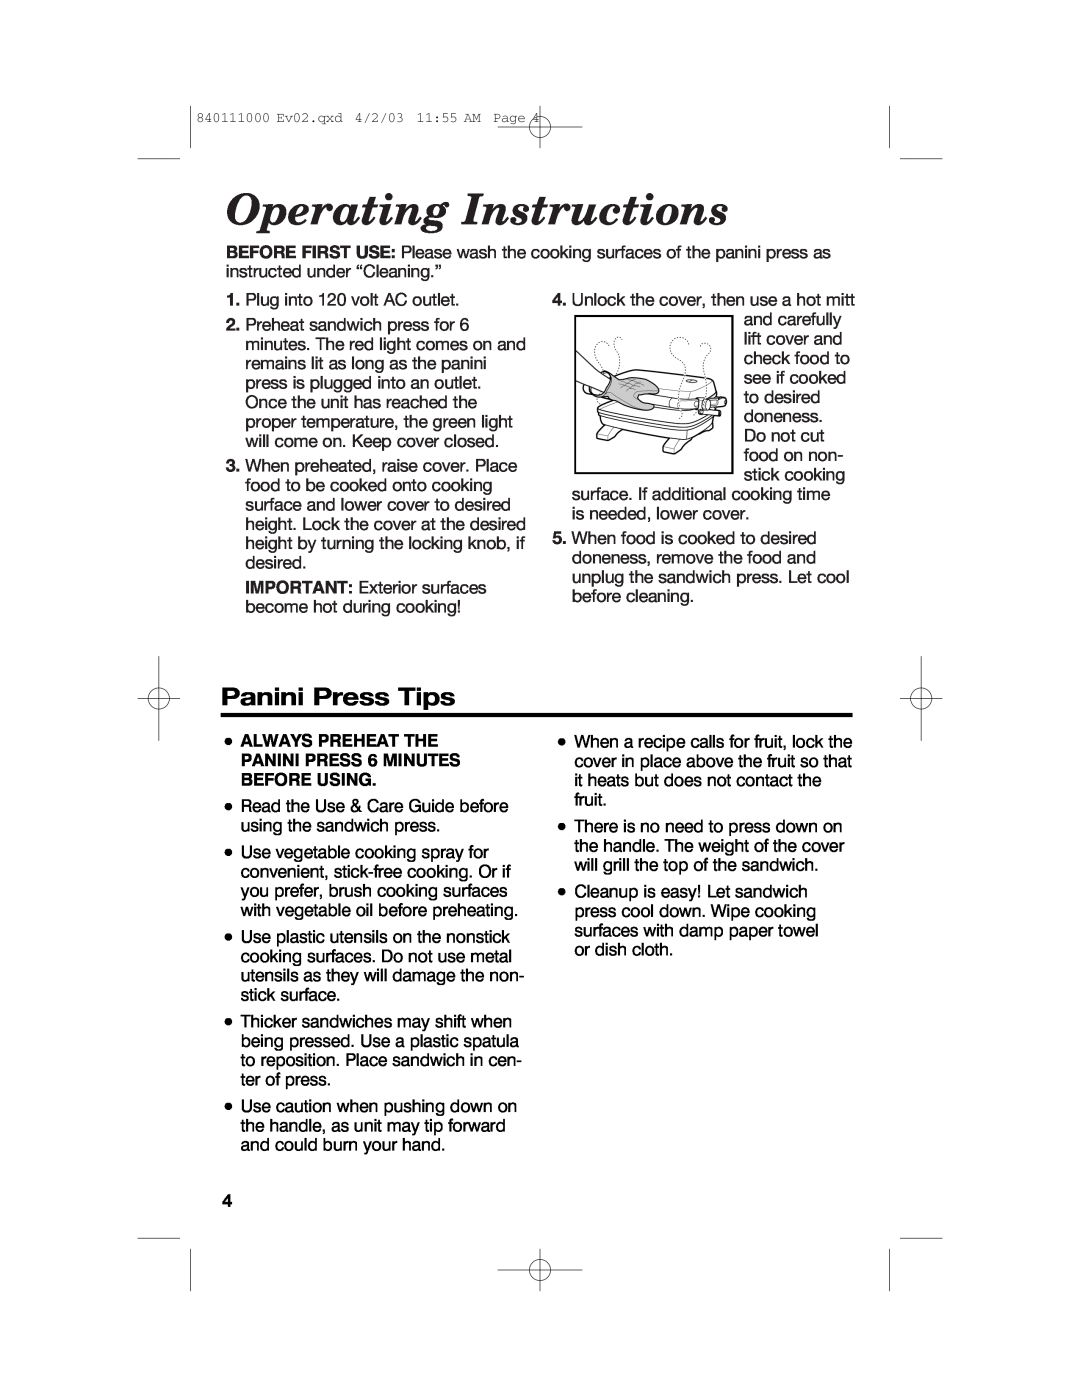 Hamilton Beach 25450 Operating Instructions, Panini Press Tips, Always Preheat The, PANINI PRESS 6 MINUTES, Before Using 